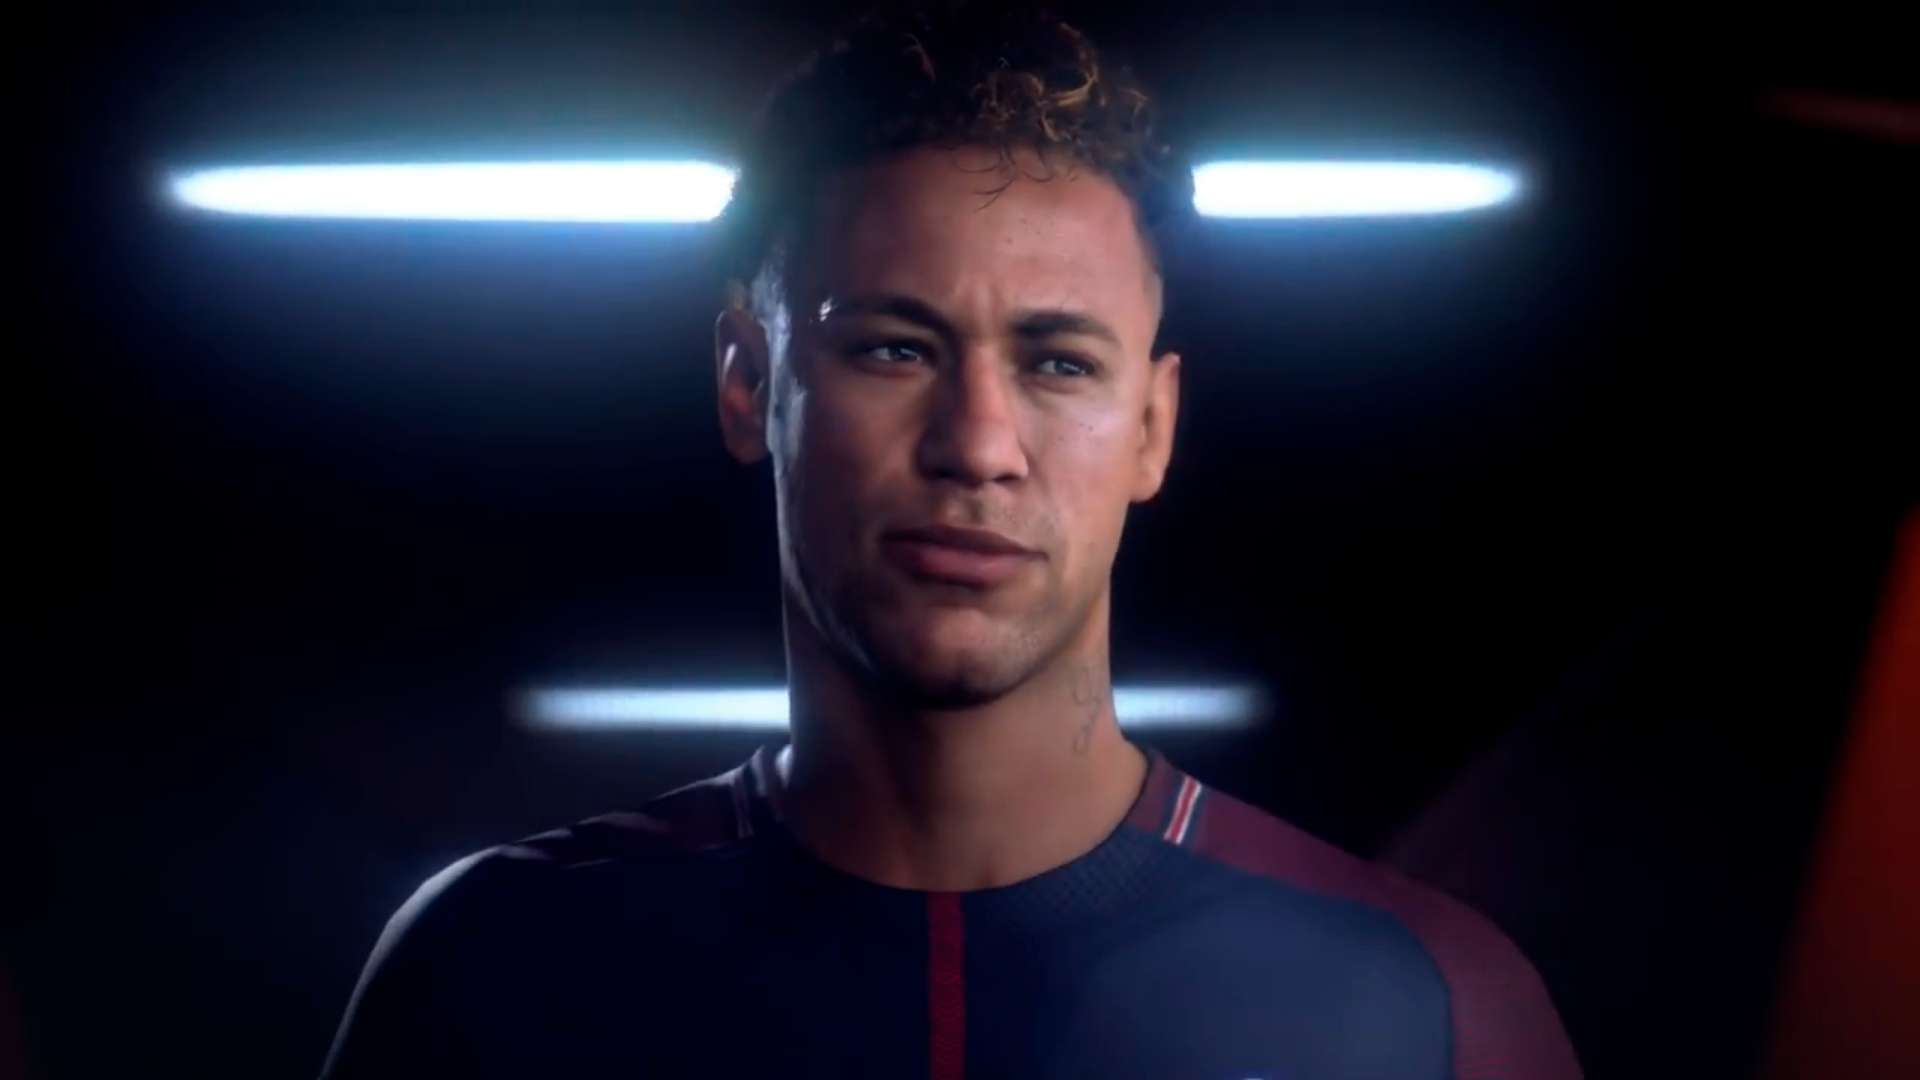 Neymar FIFA 19 game footage